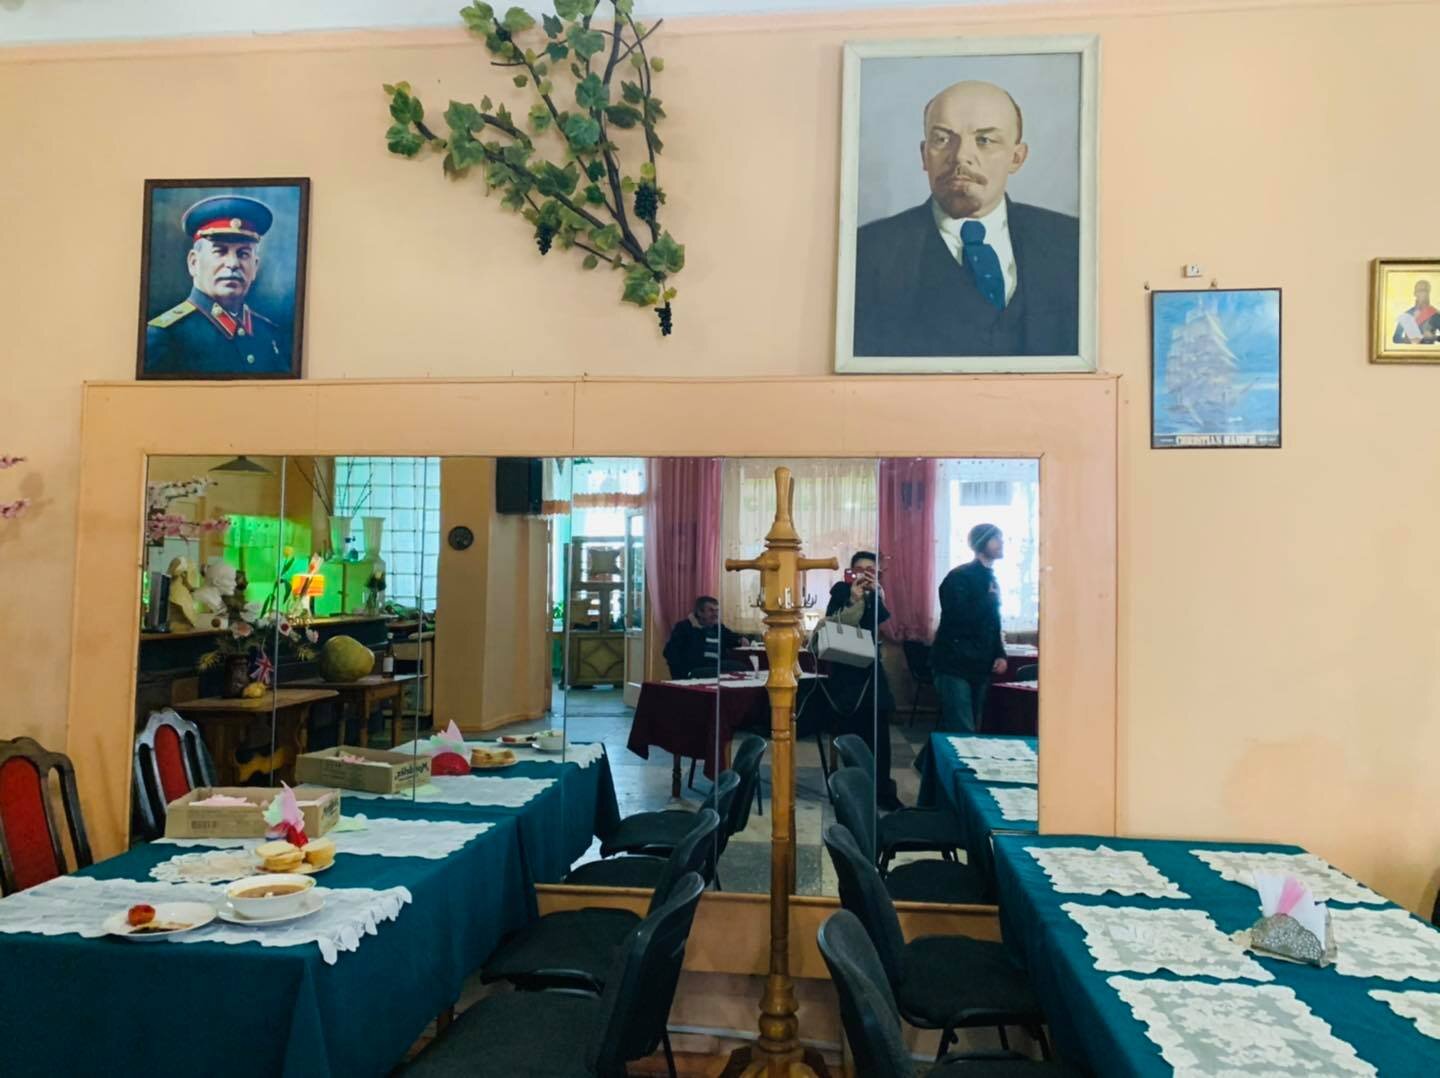 Our experience of Tiraspol, Transnistria32.jpg